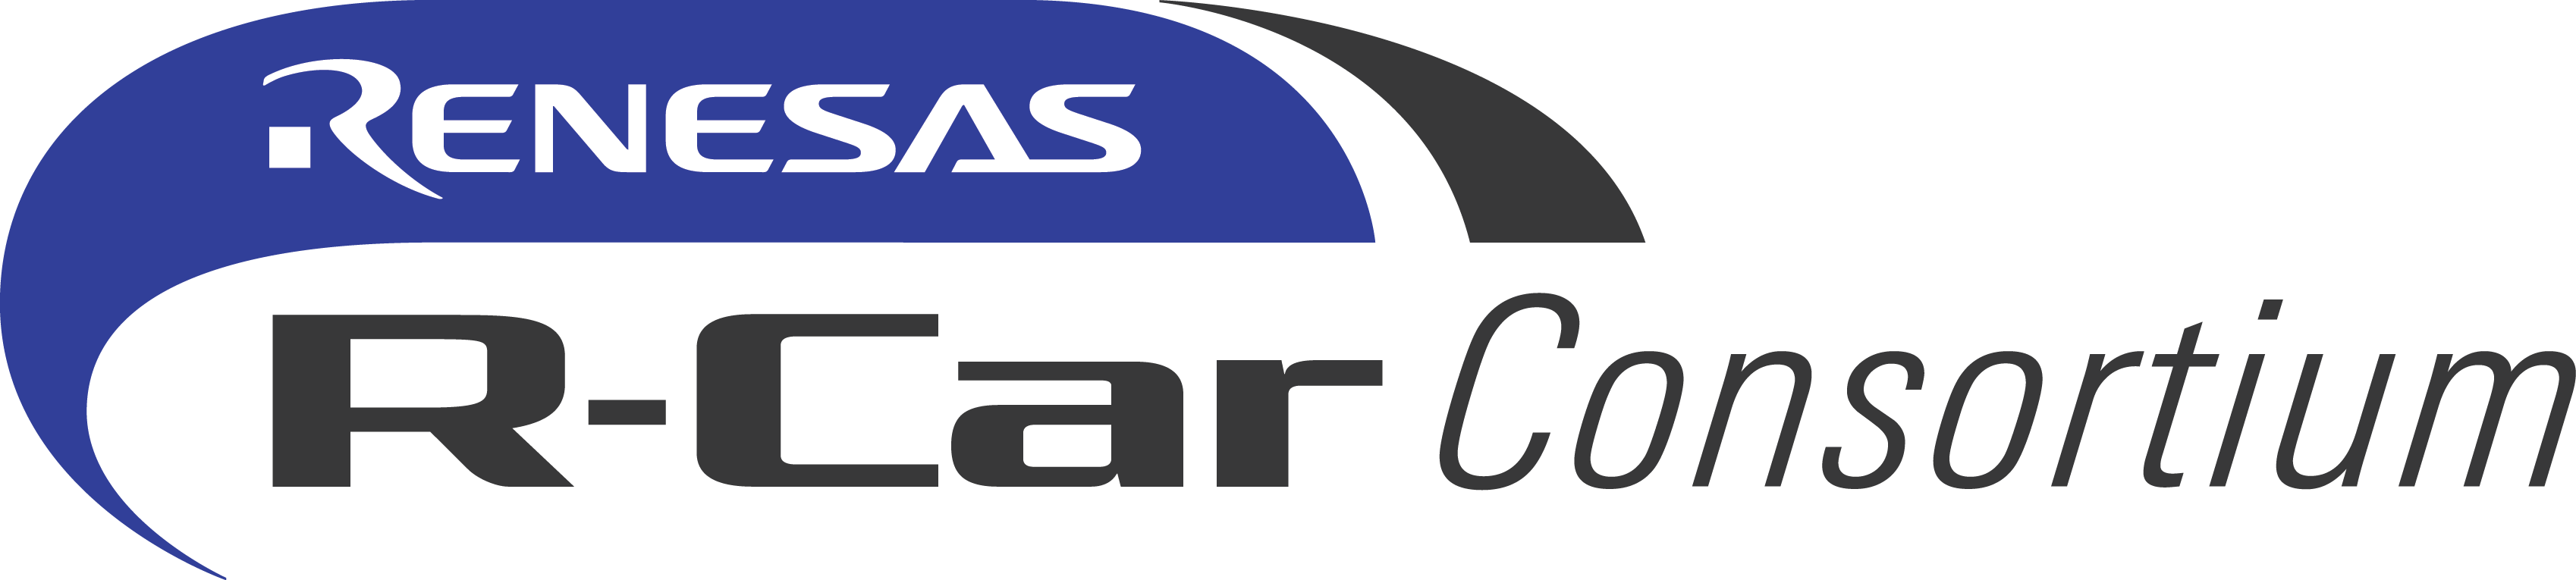 LeddarTech is a member of Renesas' R-Car Consortium